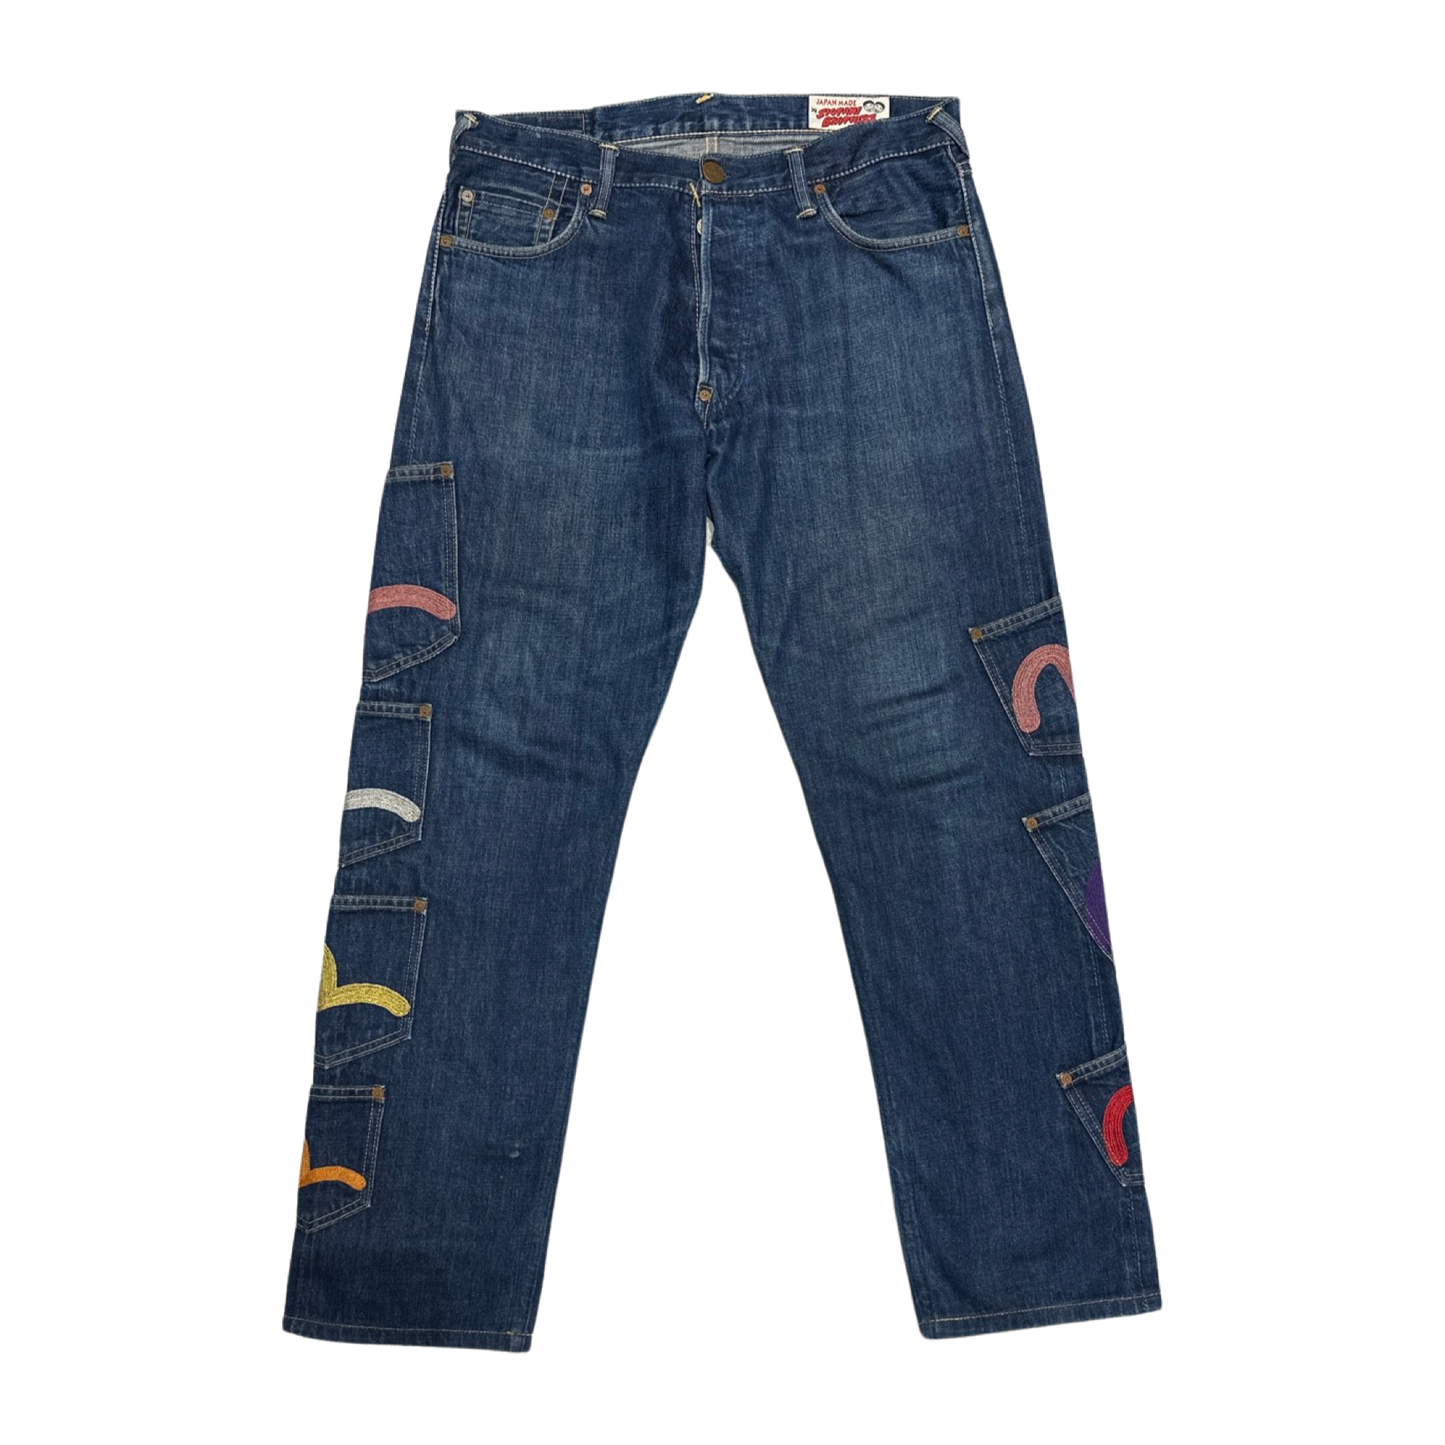 EVISU Embroidered Multi Pocket Seagull Jeans (C)